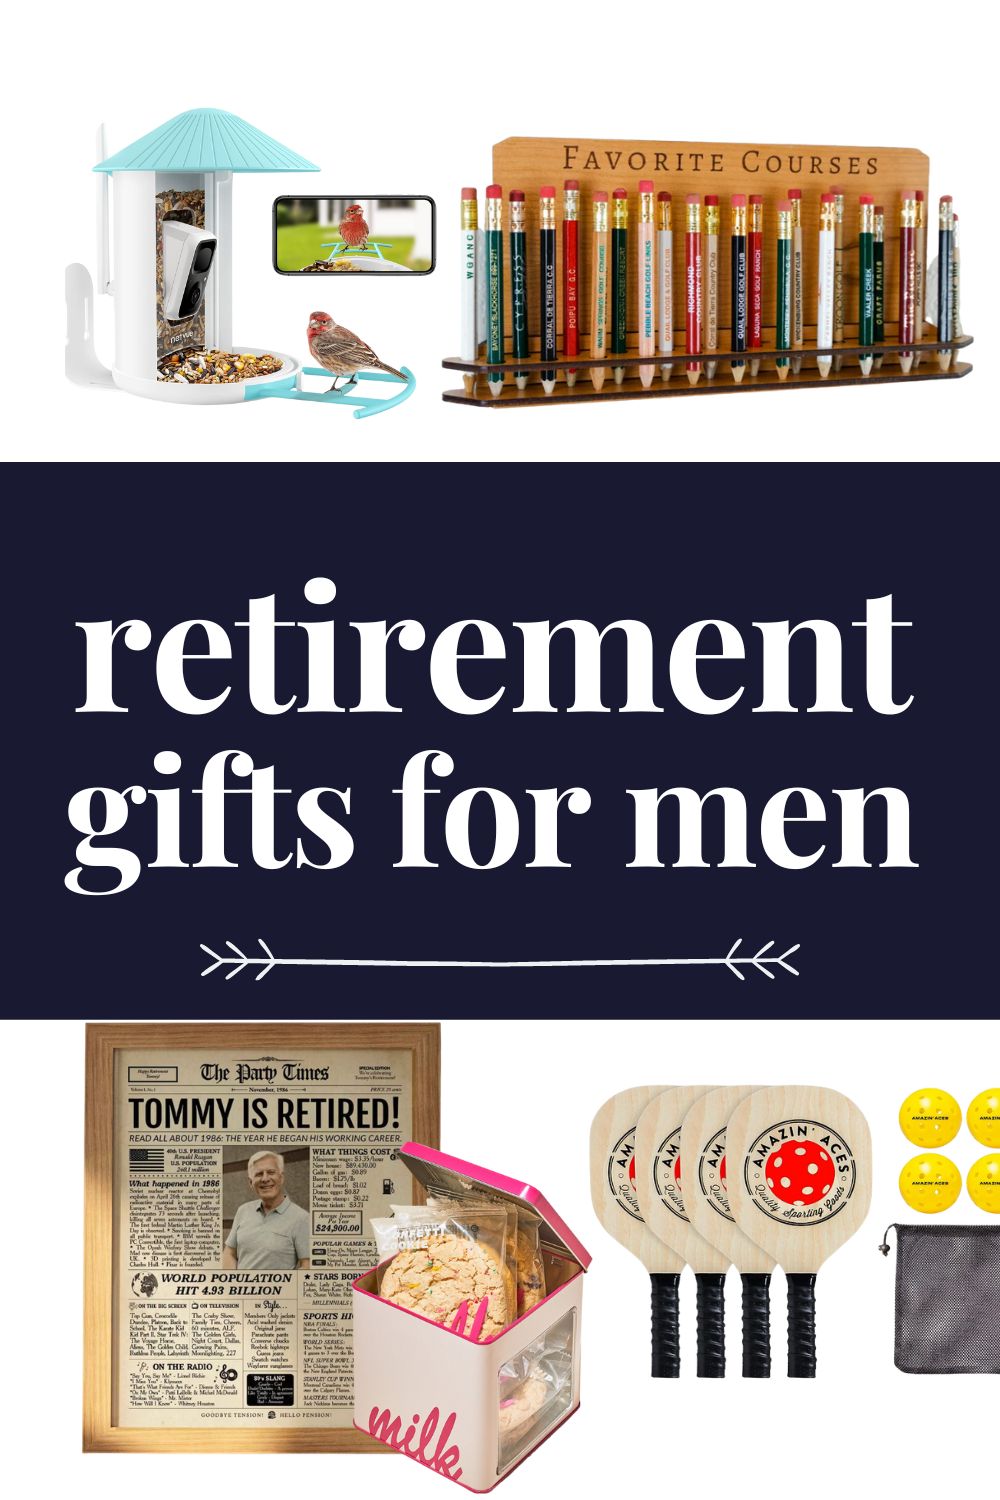 DIY Retirement Gift Ideas